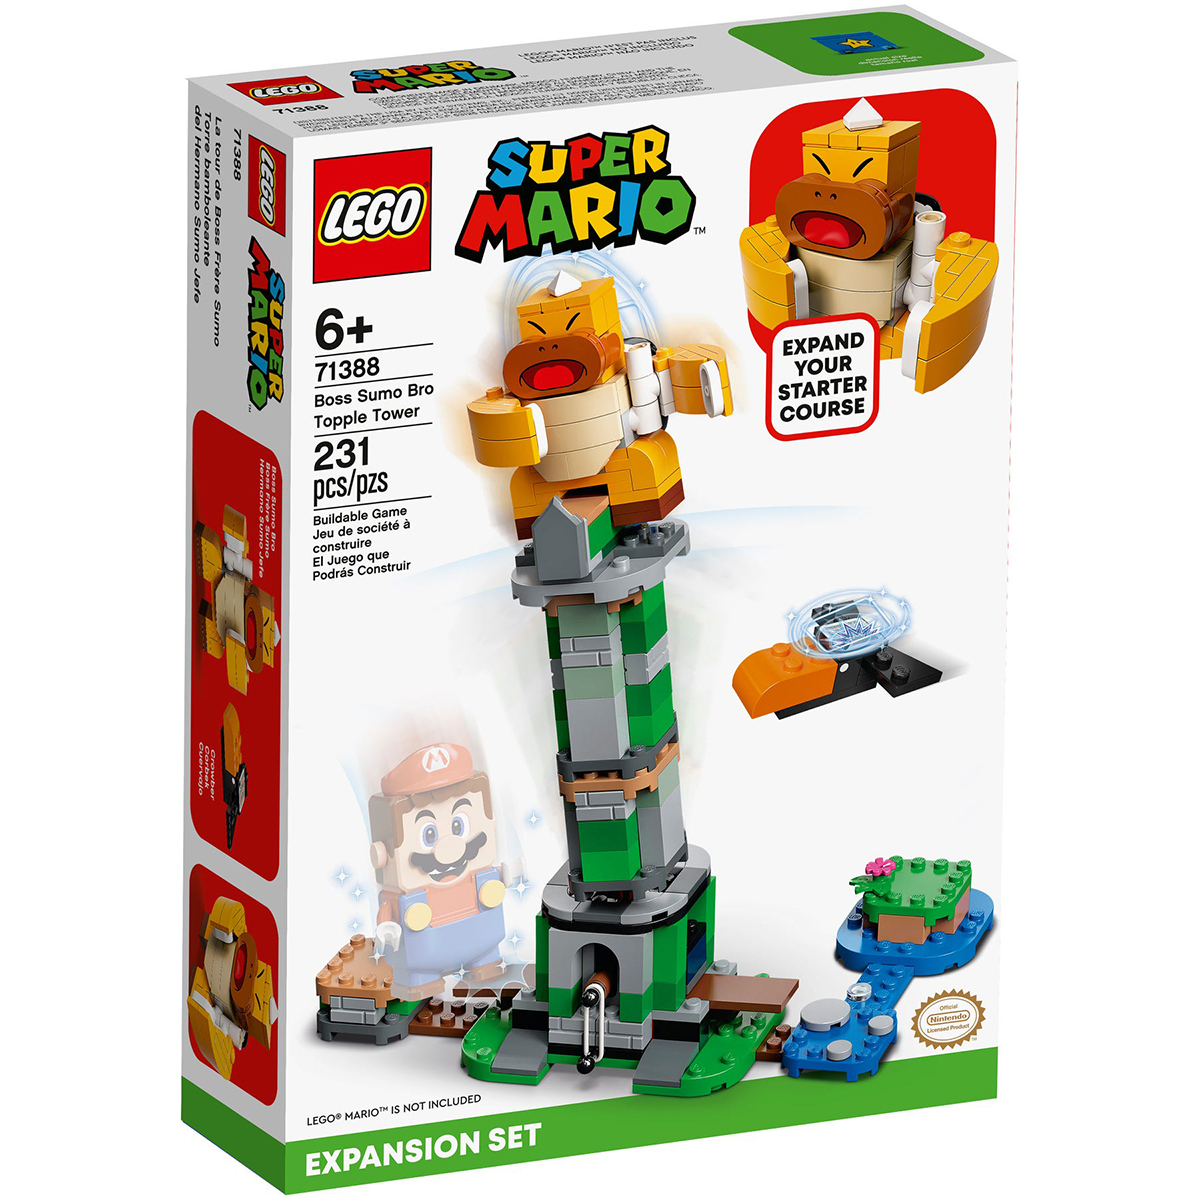 LEGO(R) Super Mario Boss Sumo Bro Topple Tower Expansion Set